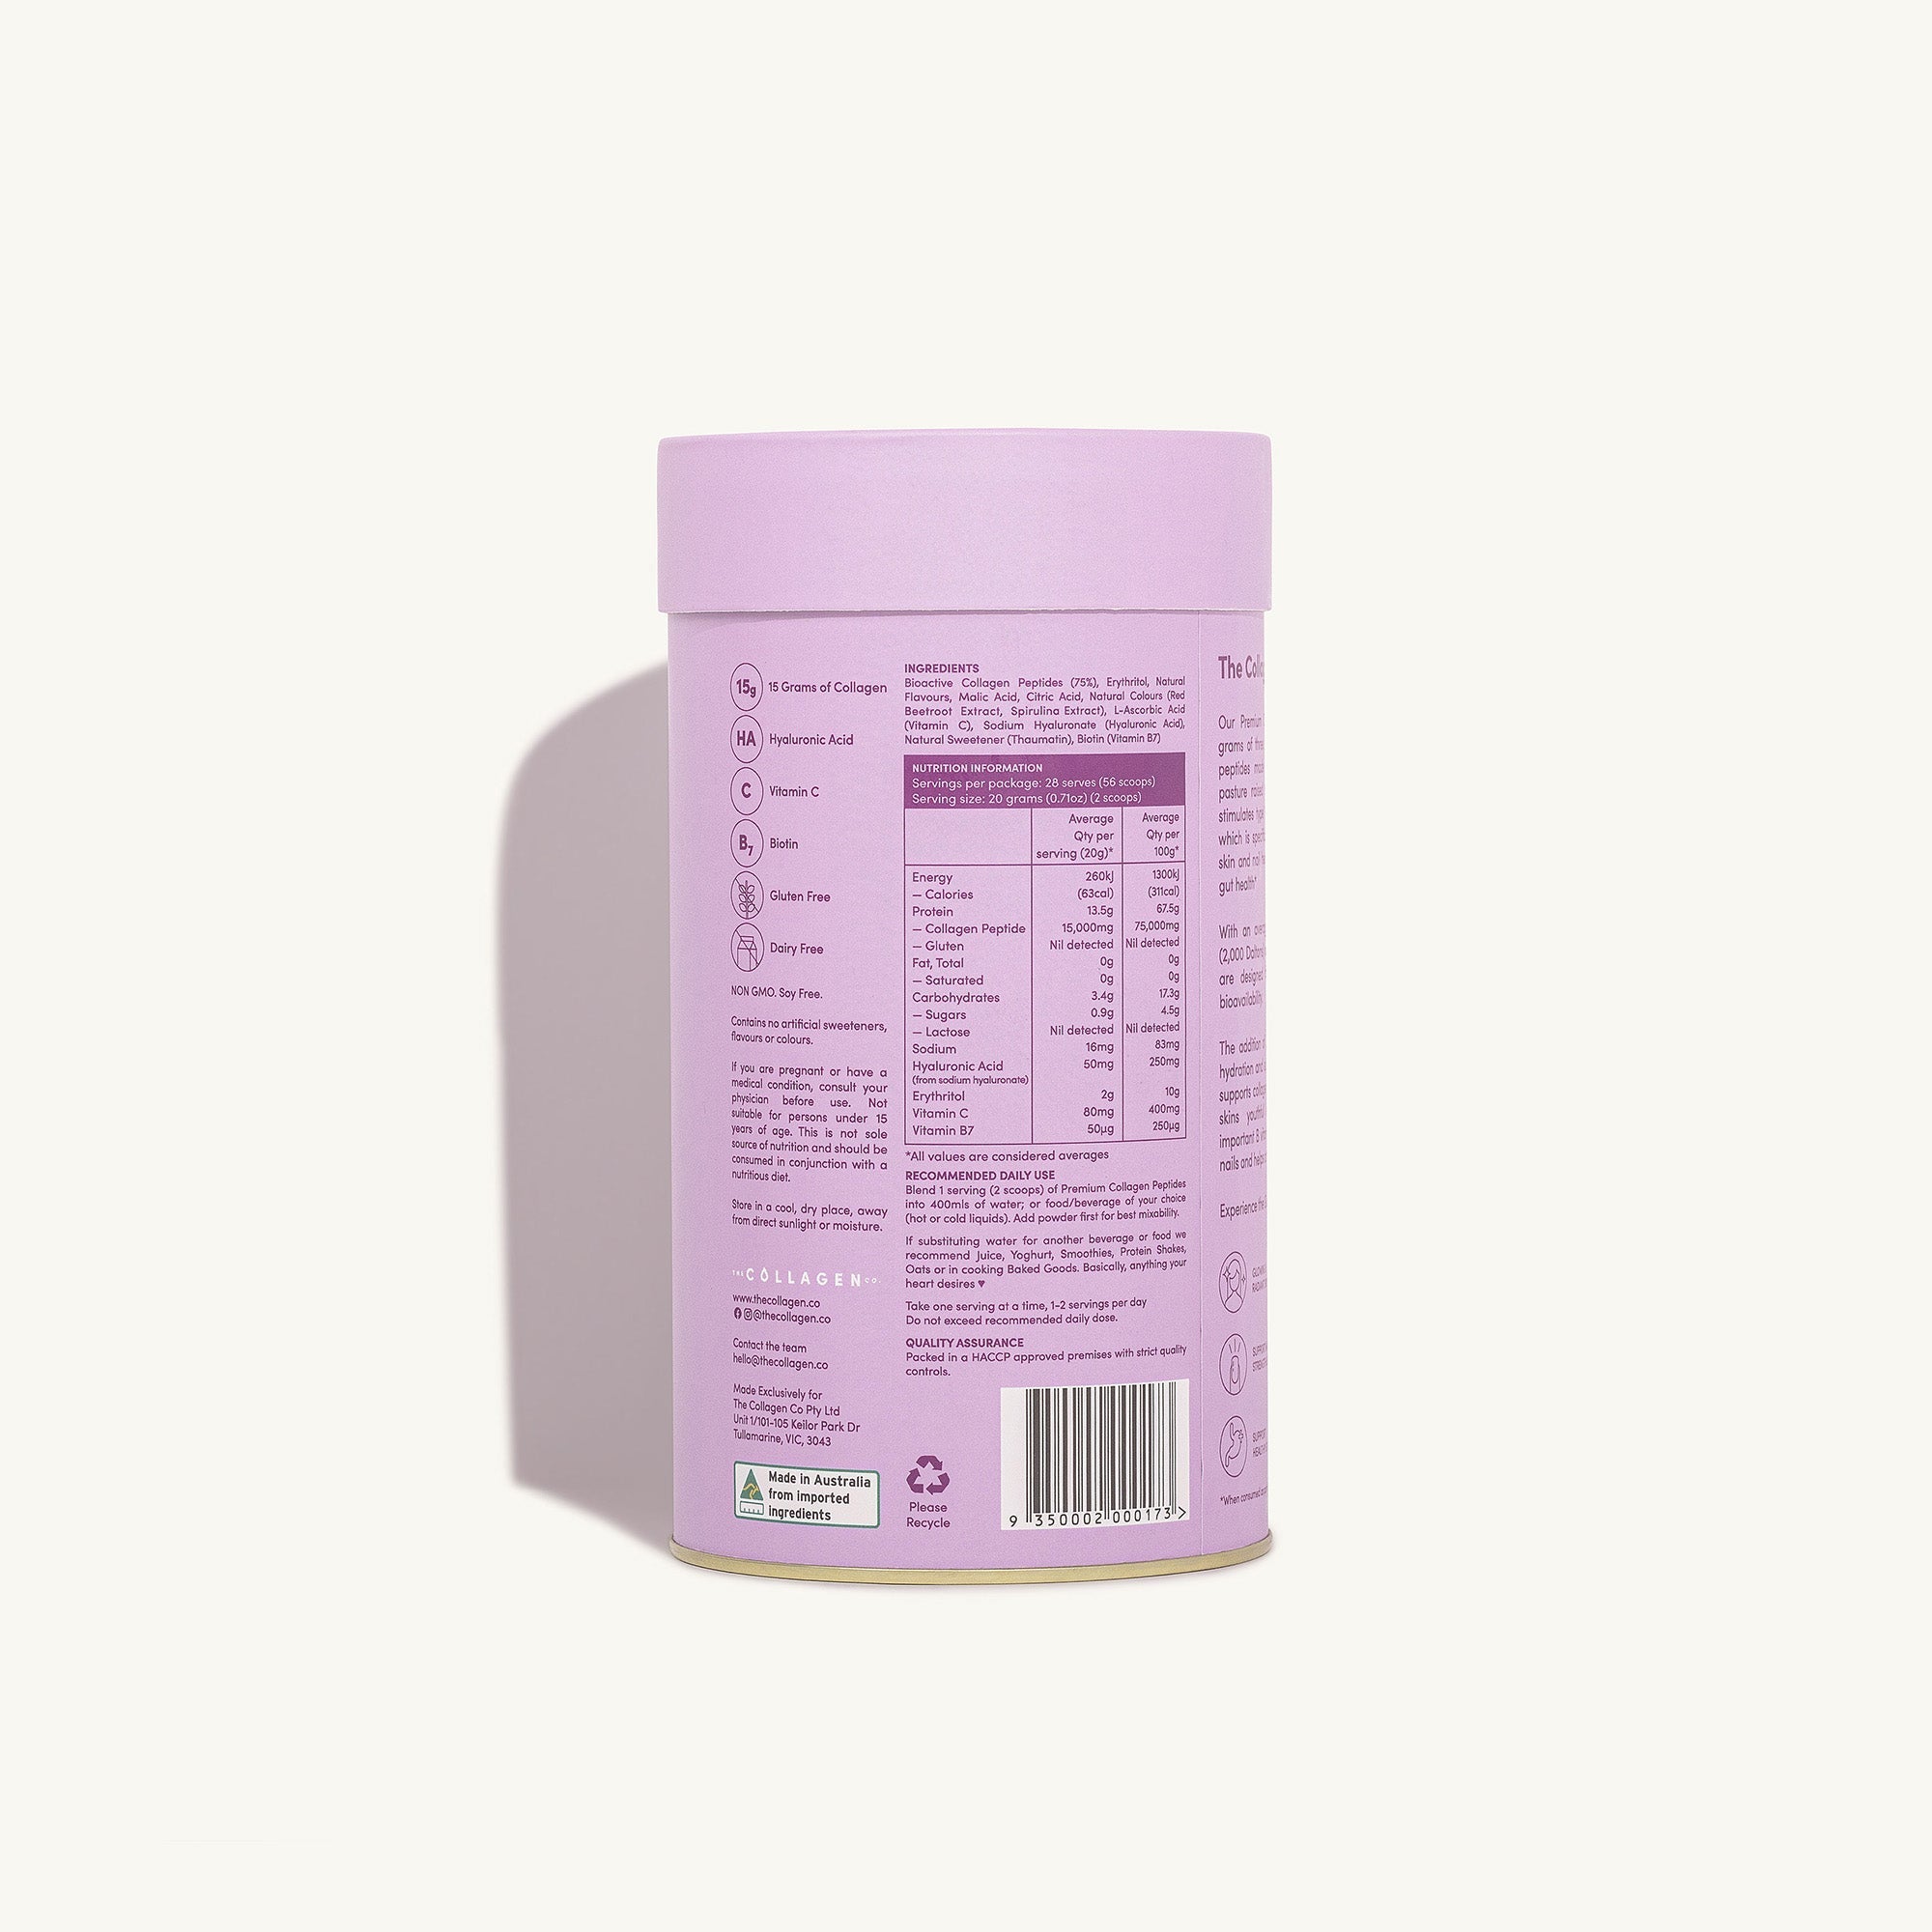 Mixed Berry Collagen Powder - 560g - The Collagen Co.